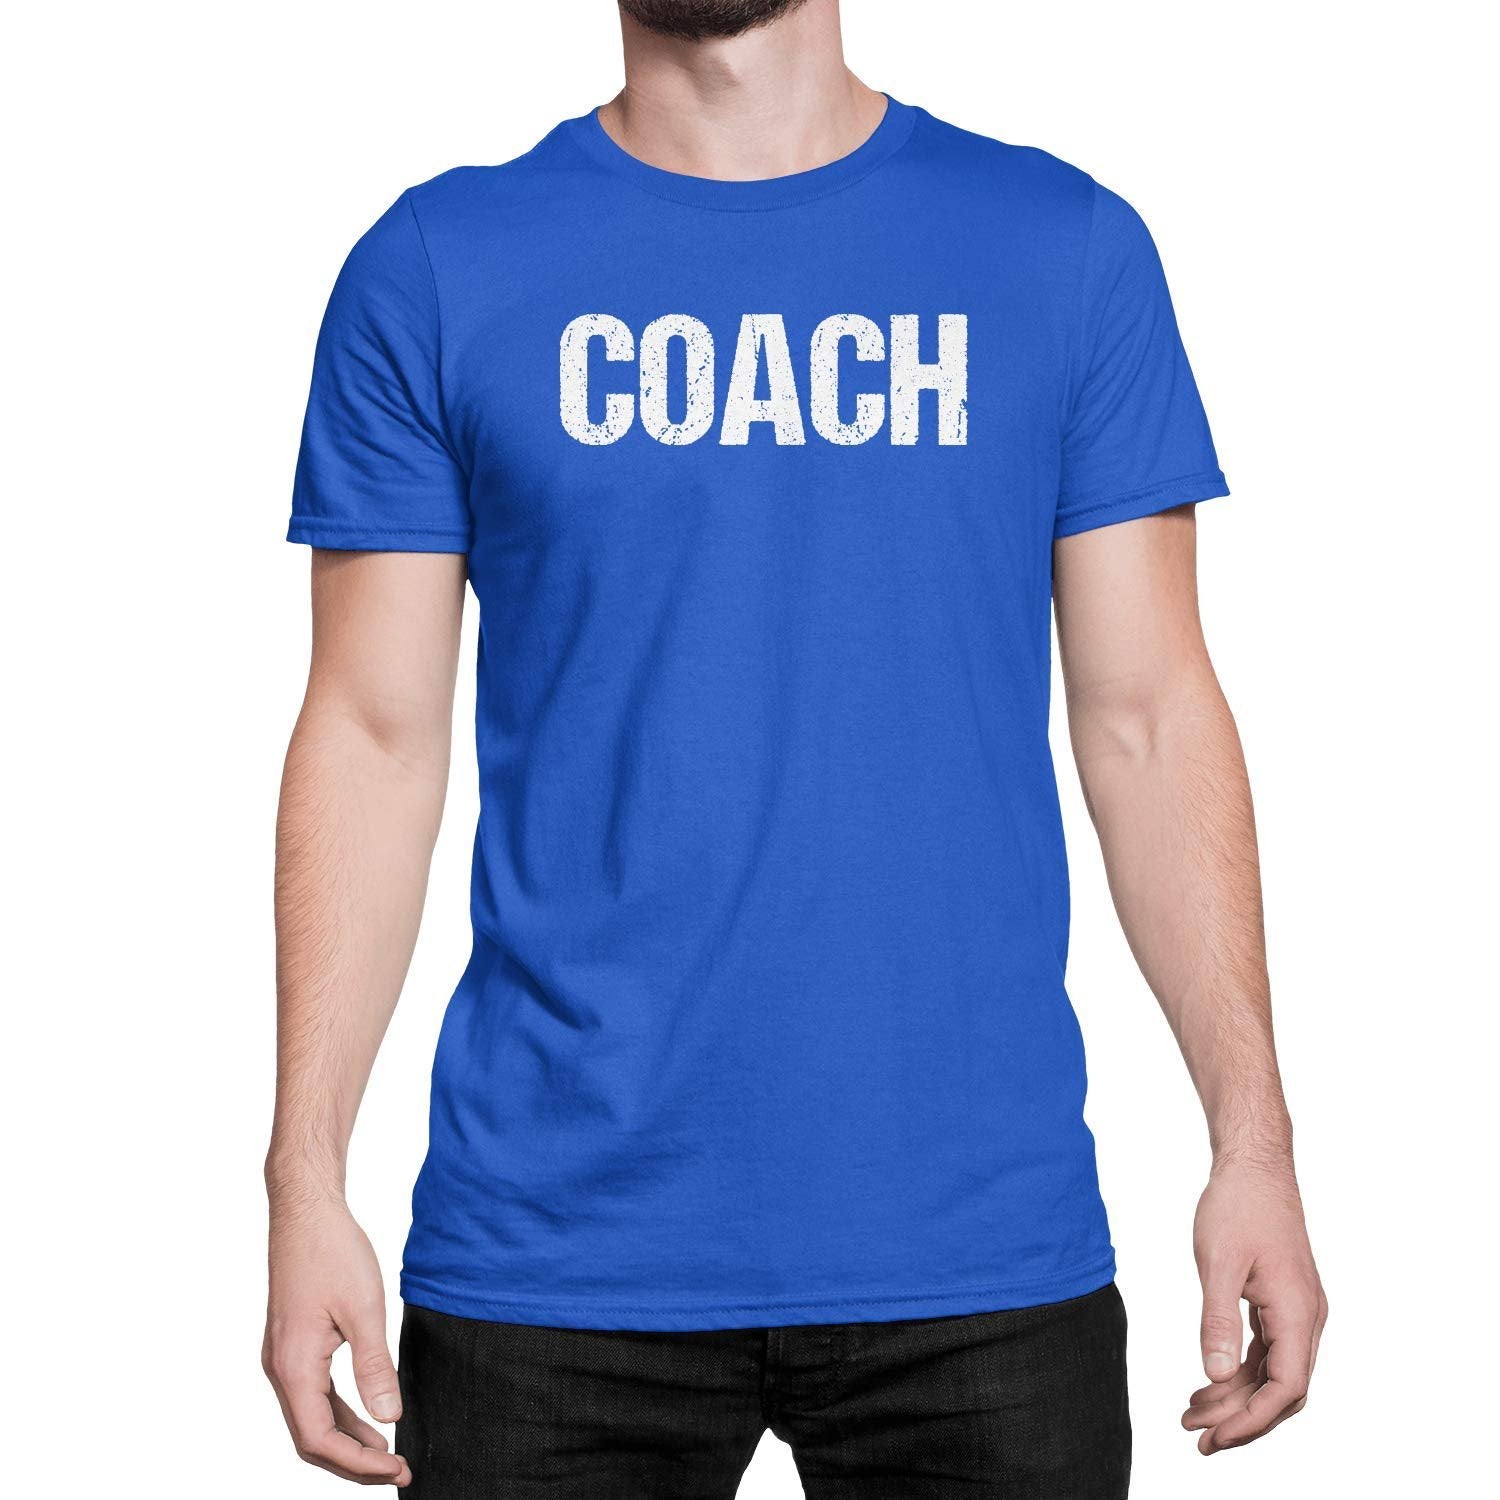 Coach T-Shirt Sports Coaching Tee Shirt (Royal & White, Distressed)